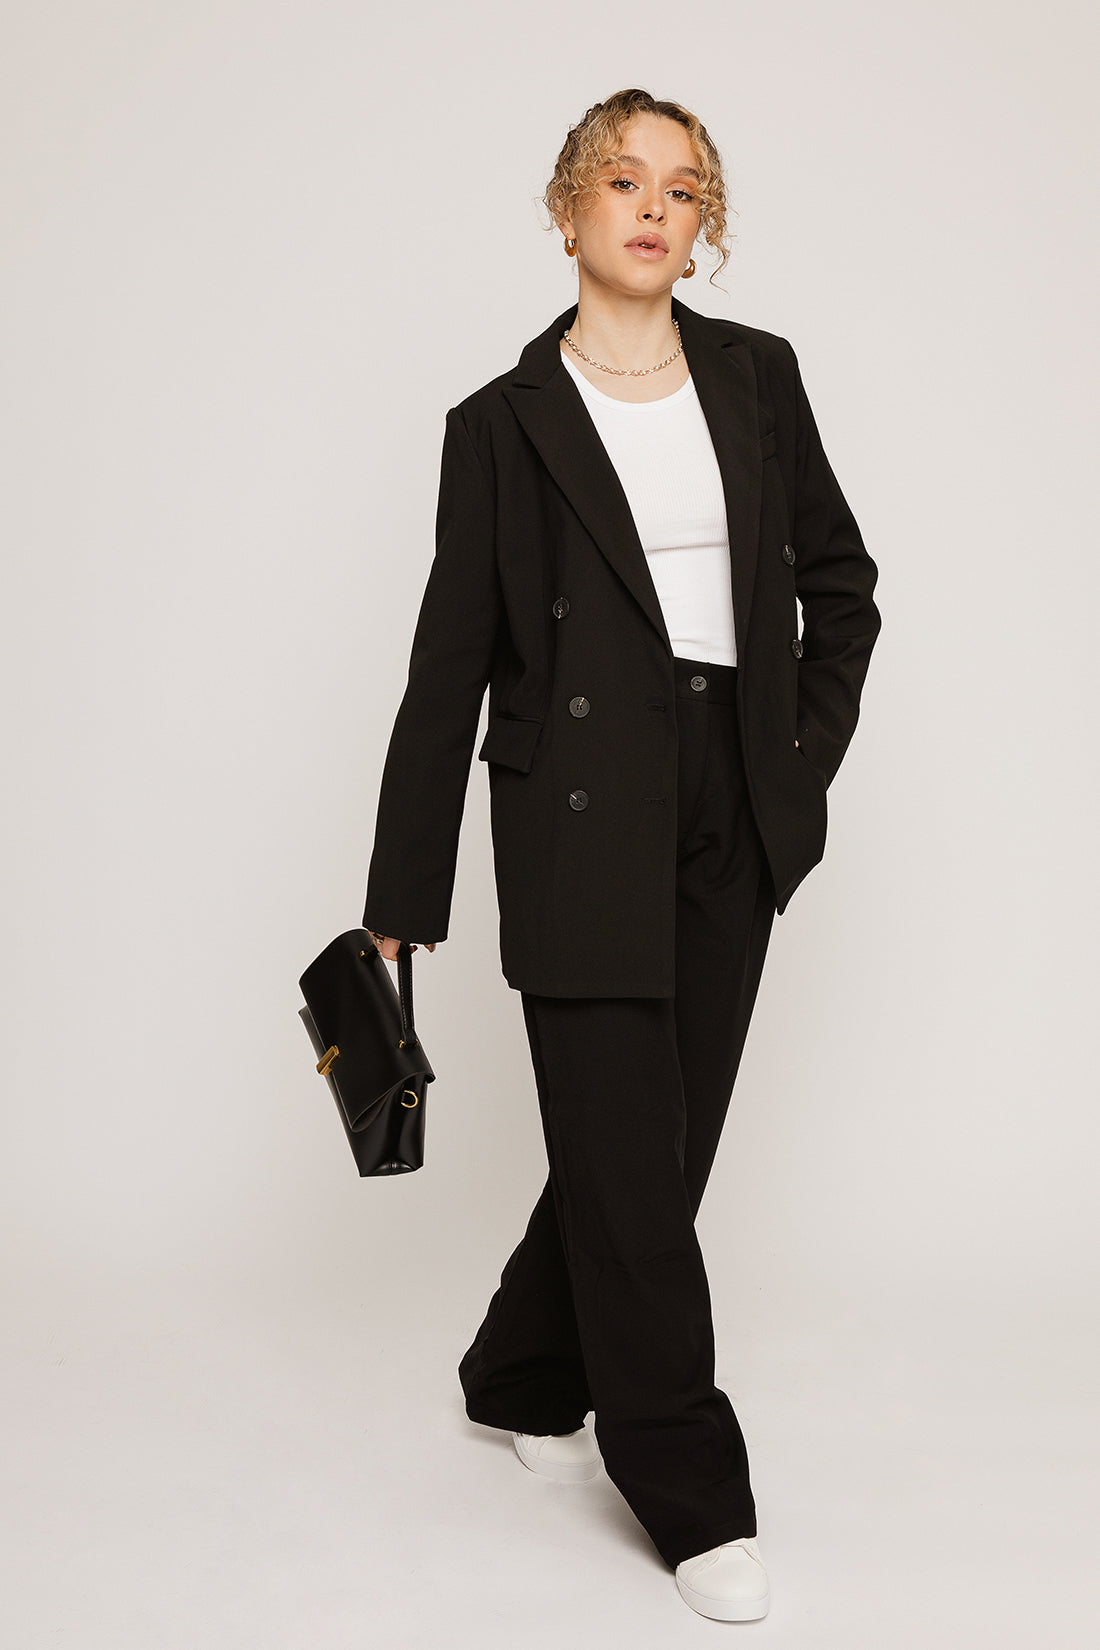 Everleigh Black Suit Jacket - Sugar + Style